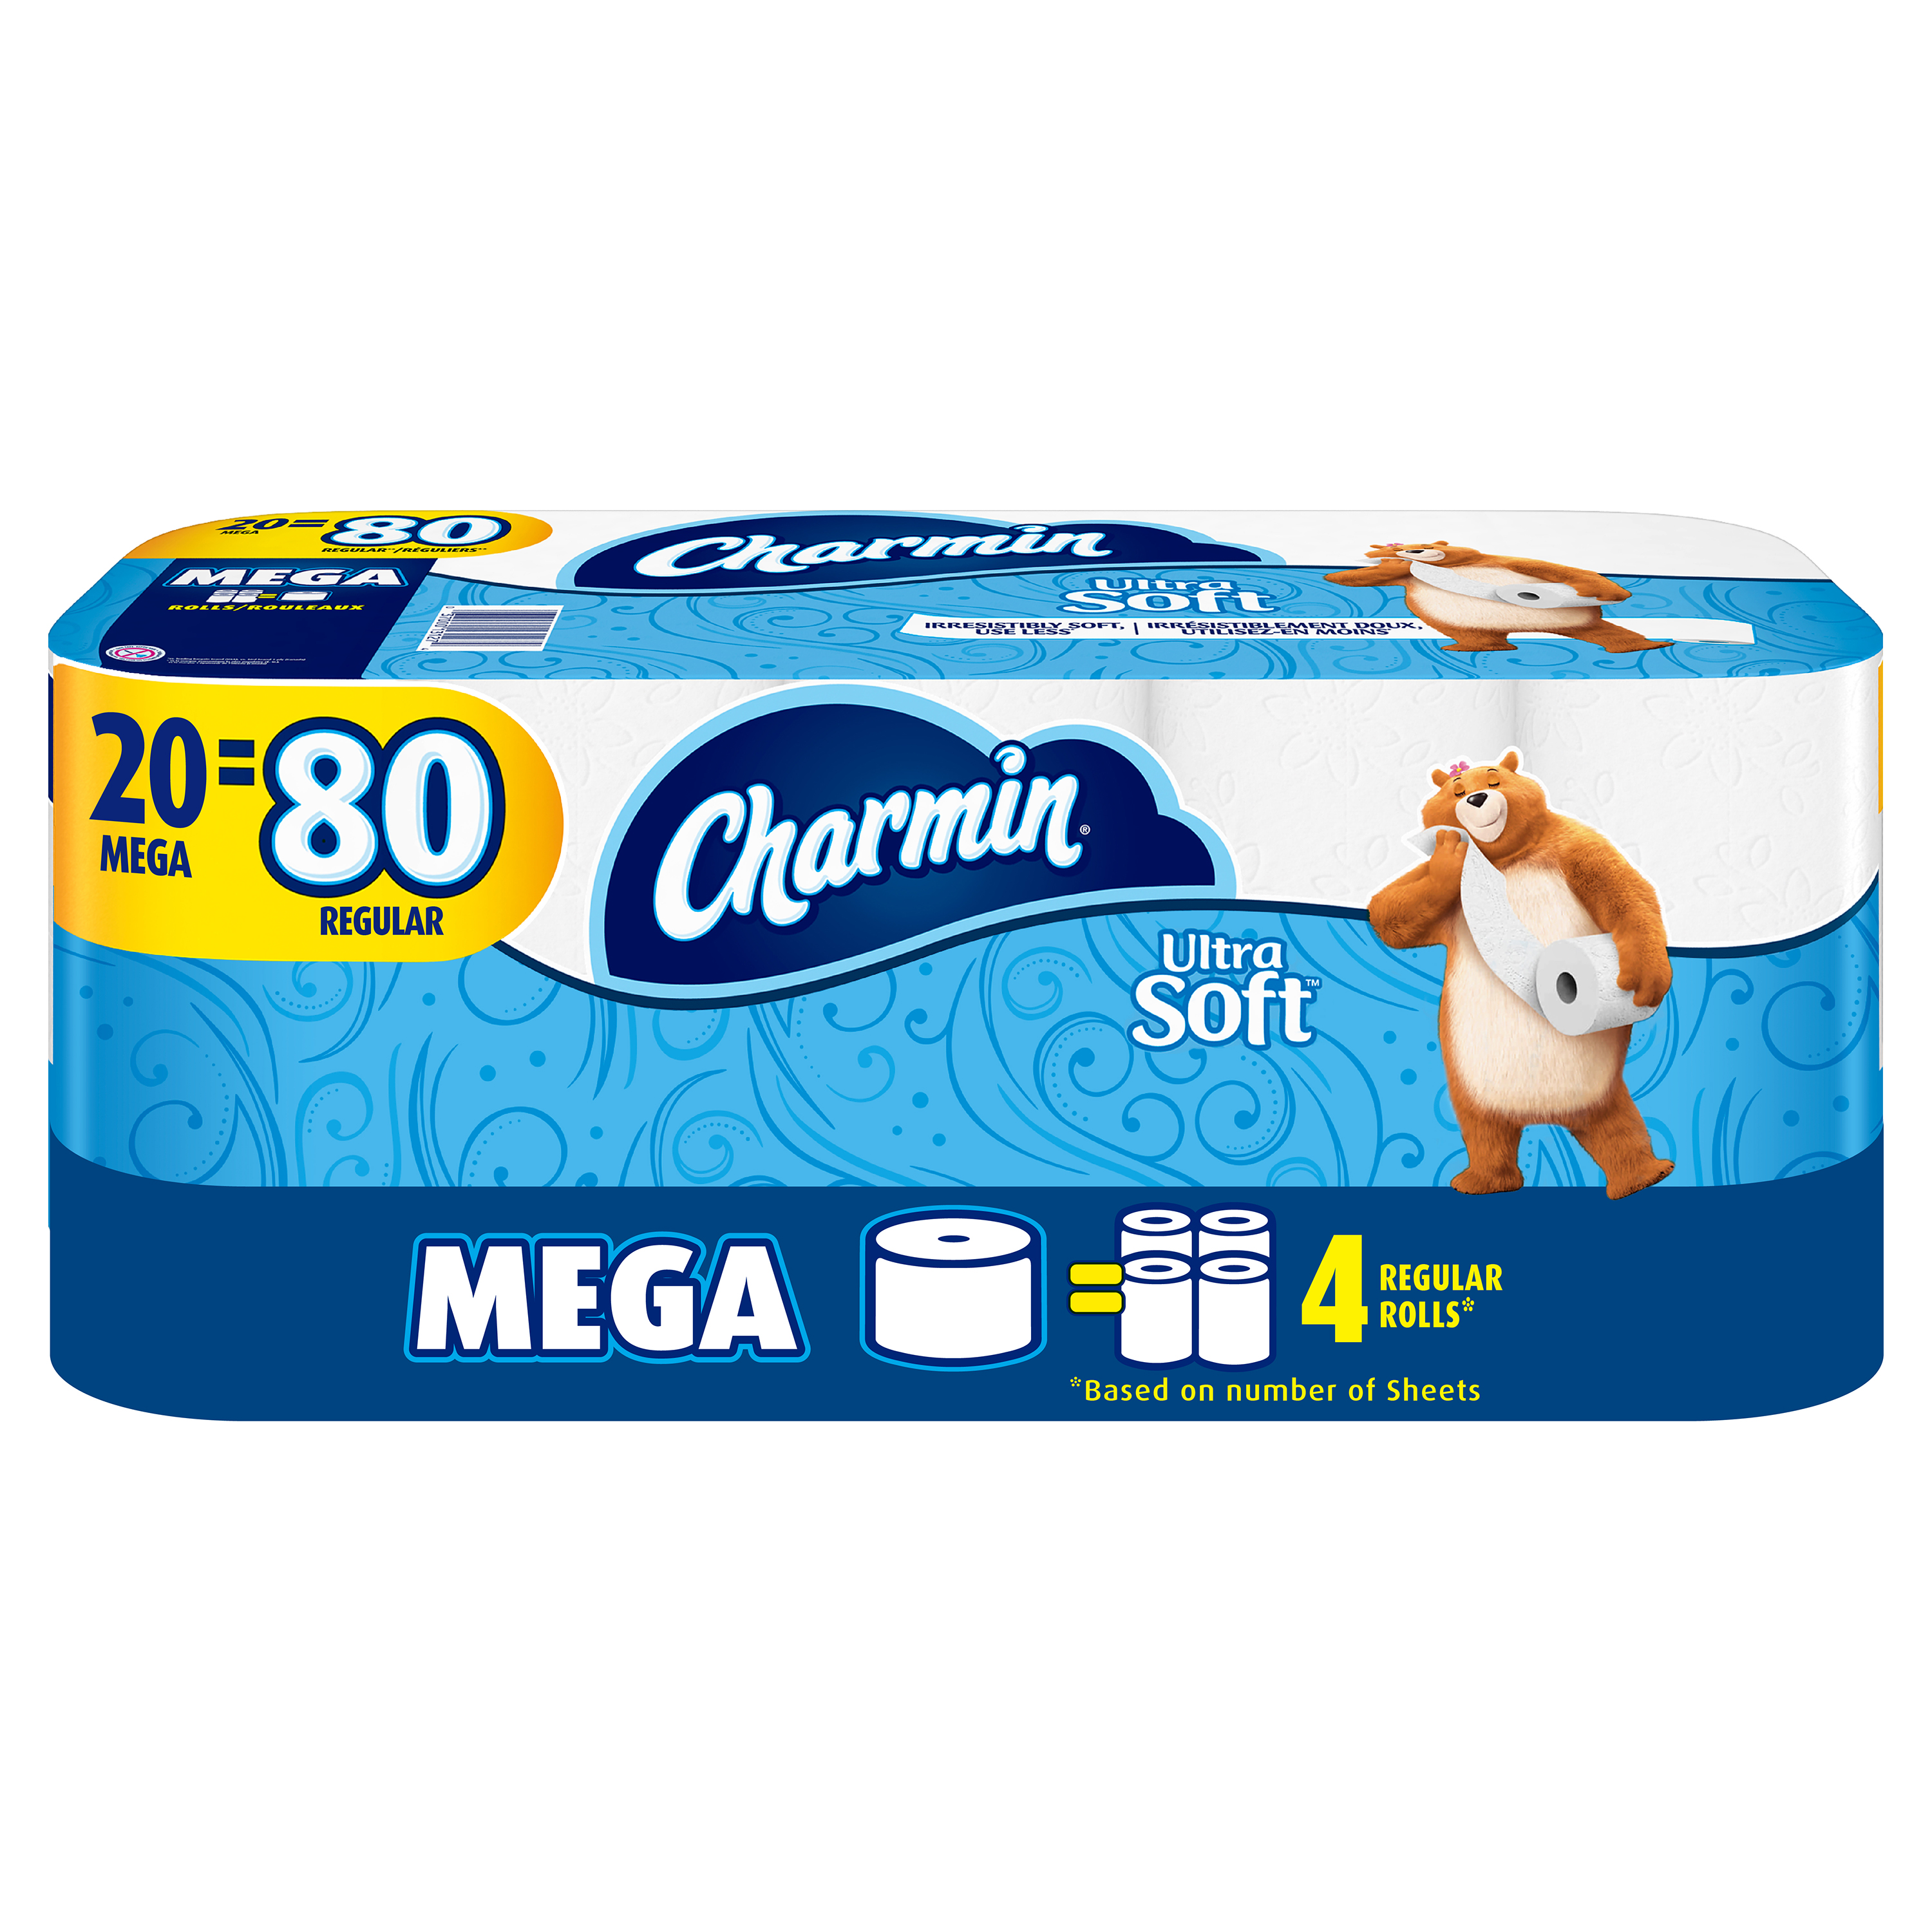 Charmin Ultra Soft Toilet Paper, 20 Mega Rolls = 80 Regular Rolls - image 1 of 11